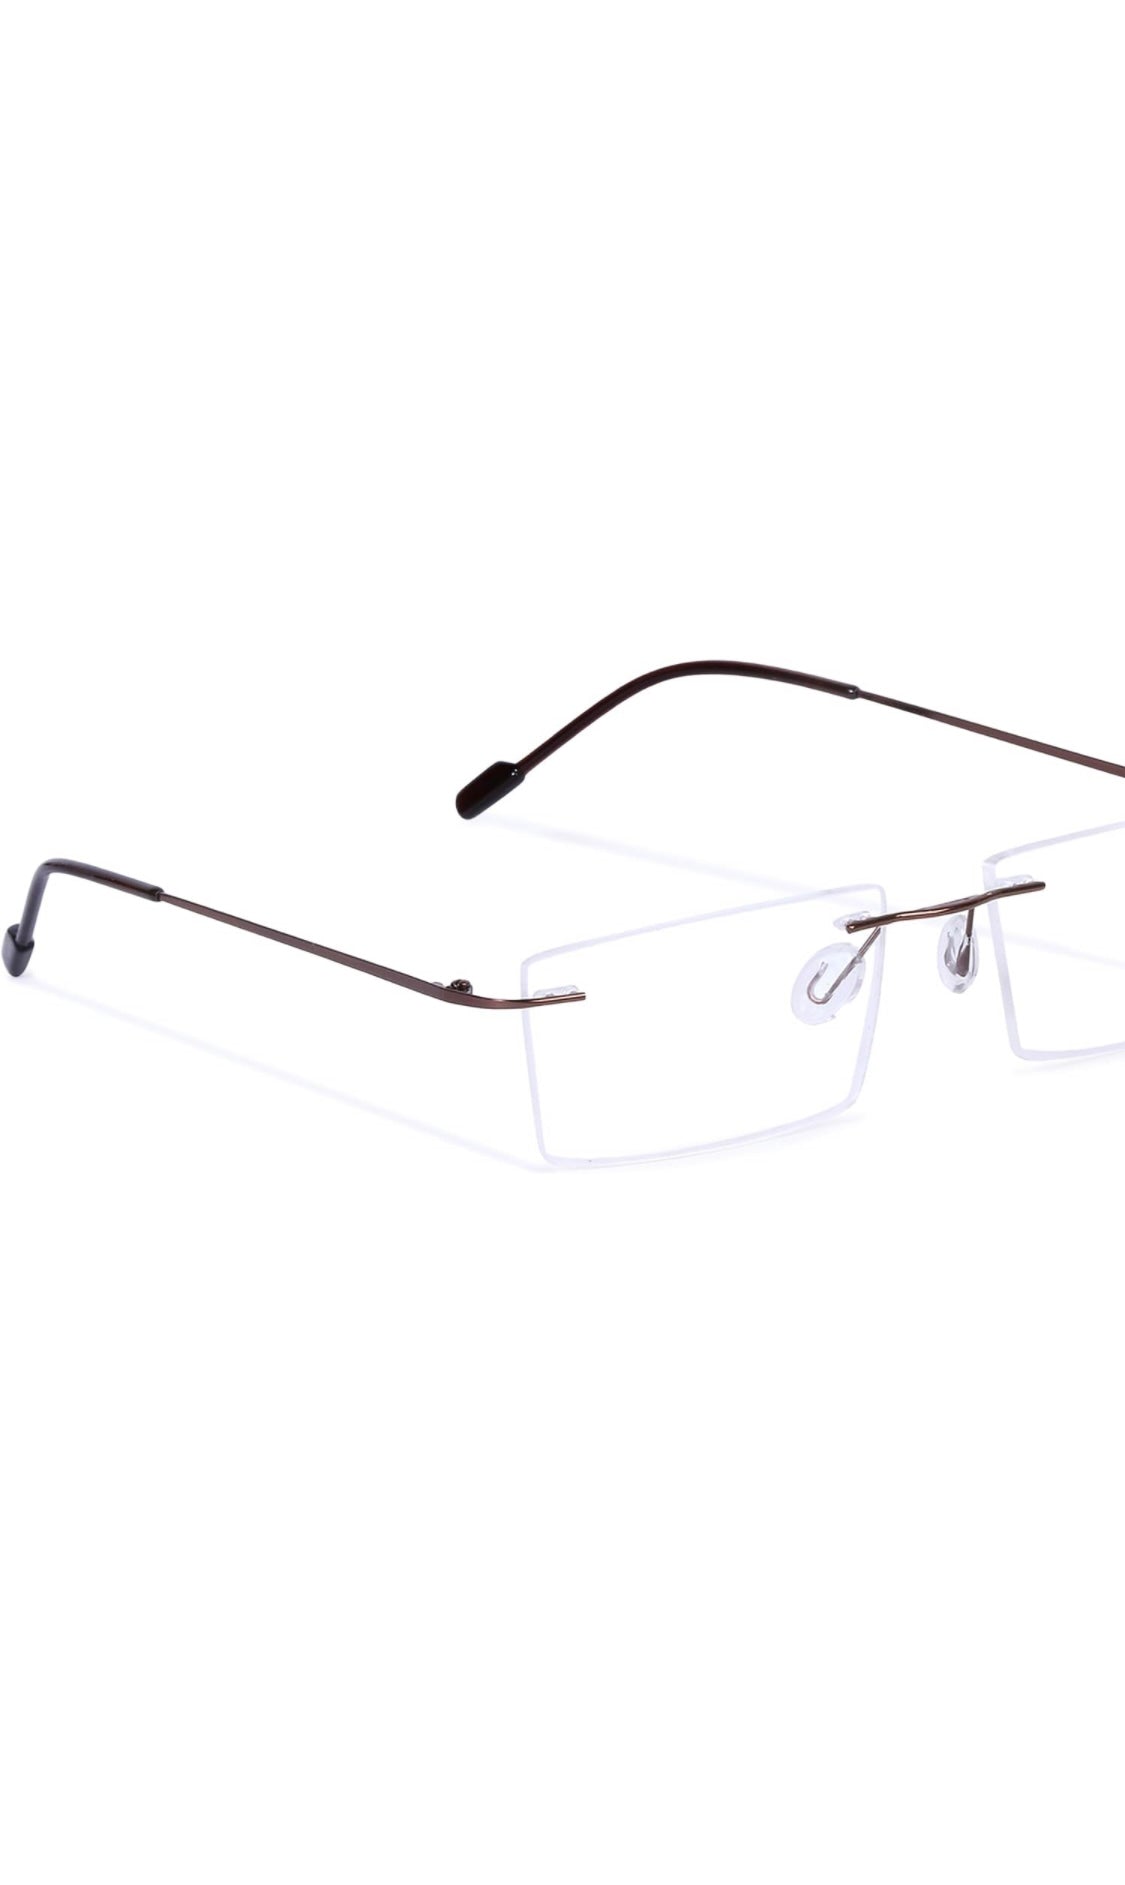 Jodykoes® Premium Rimless Anti Glare Rectangle Frame Spectacle Eyeglasses Eyewear (Copper Brown) - Jodykoes ®